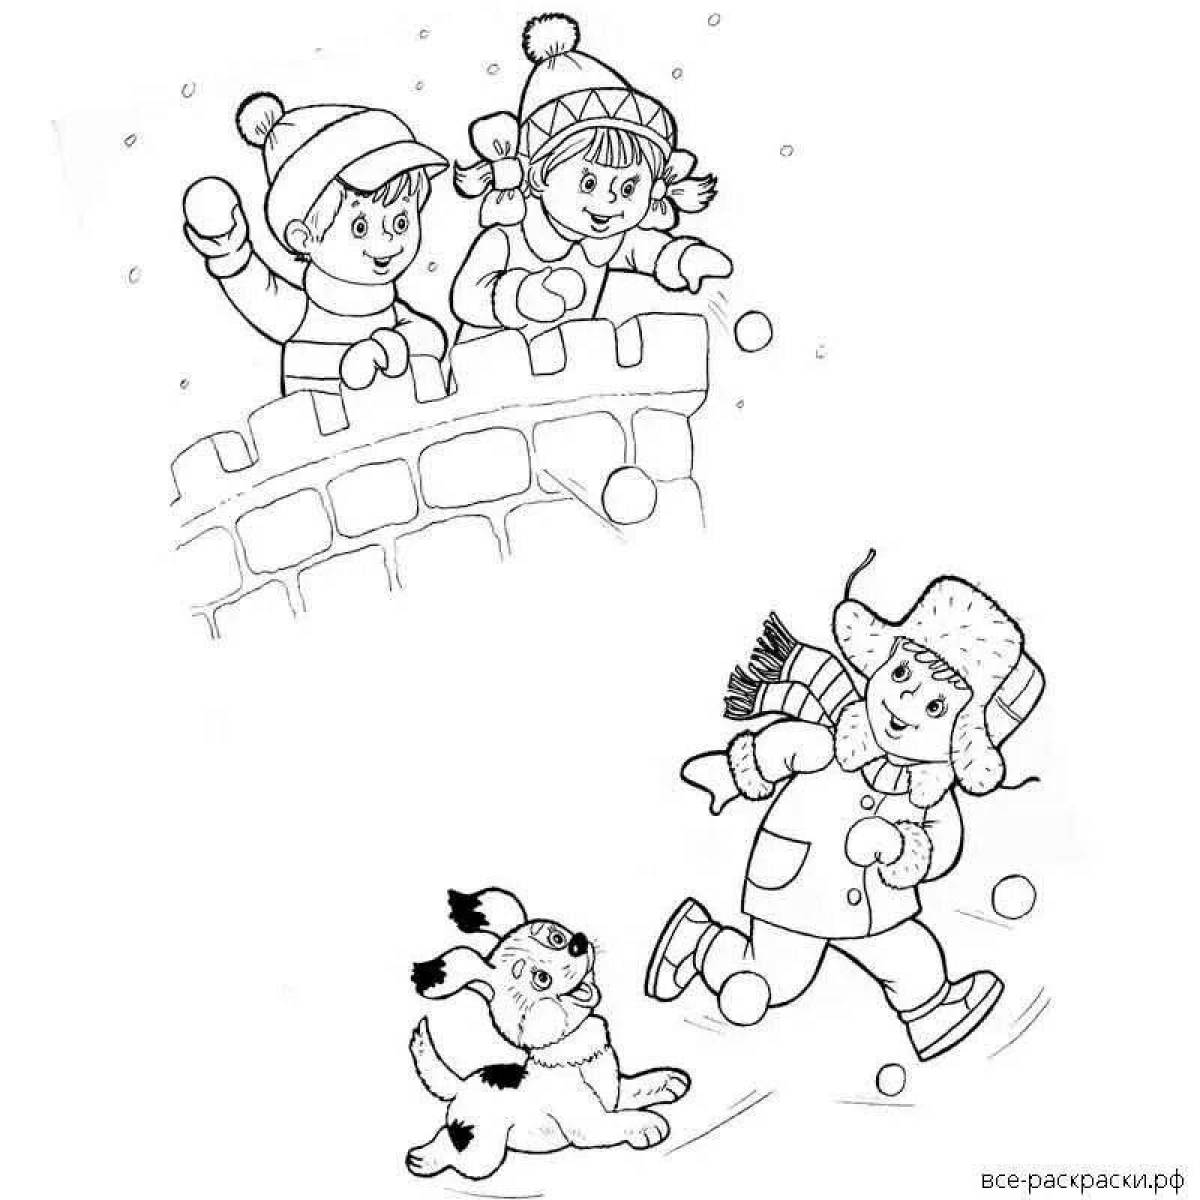 Joyful coloring winter games